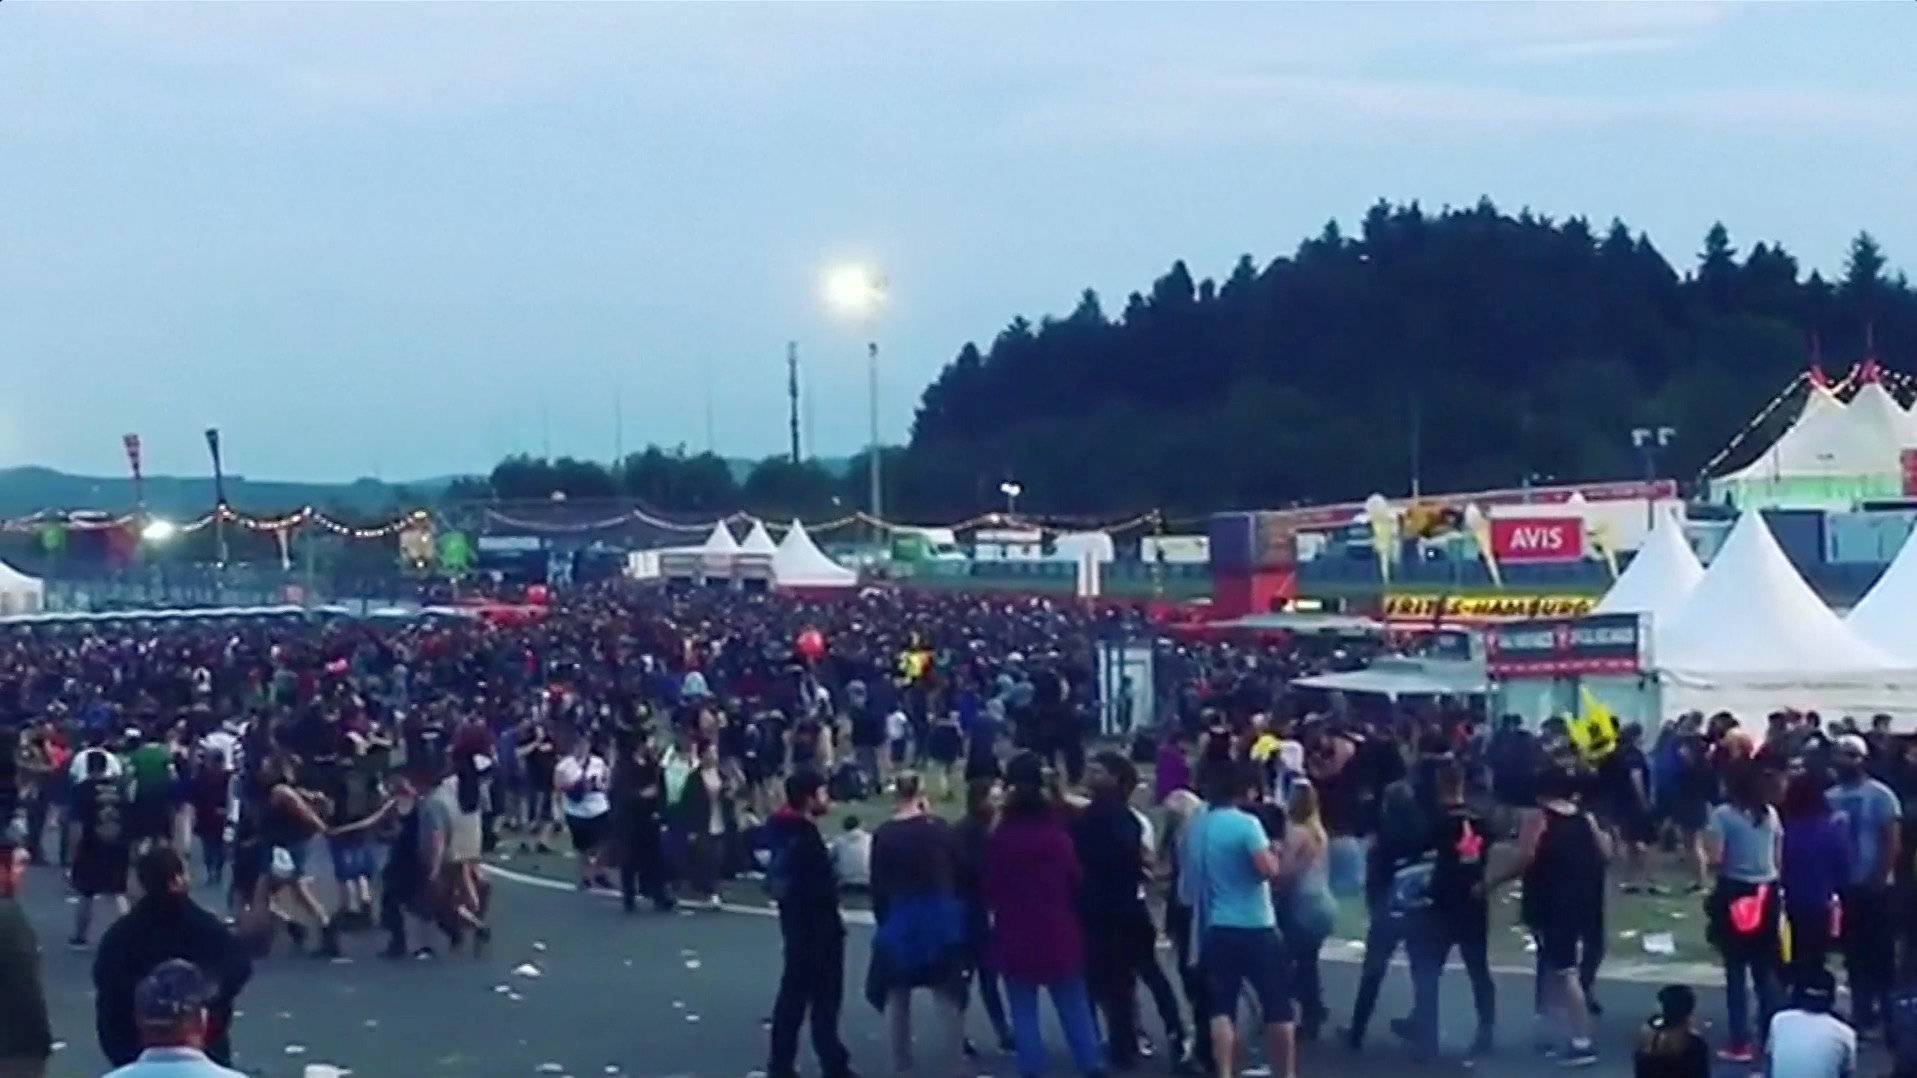 Video grab of people leaving the open-air weekend "Rock am Ring" concert near the Nuerburgring race track in Nurburg, Germany